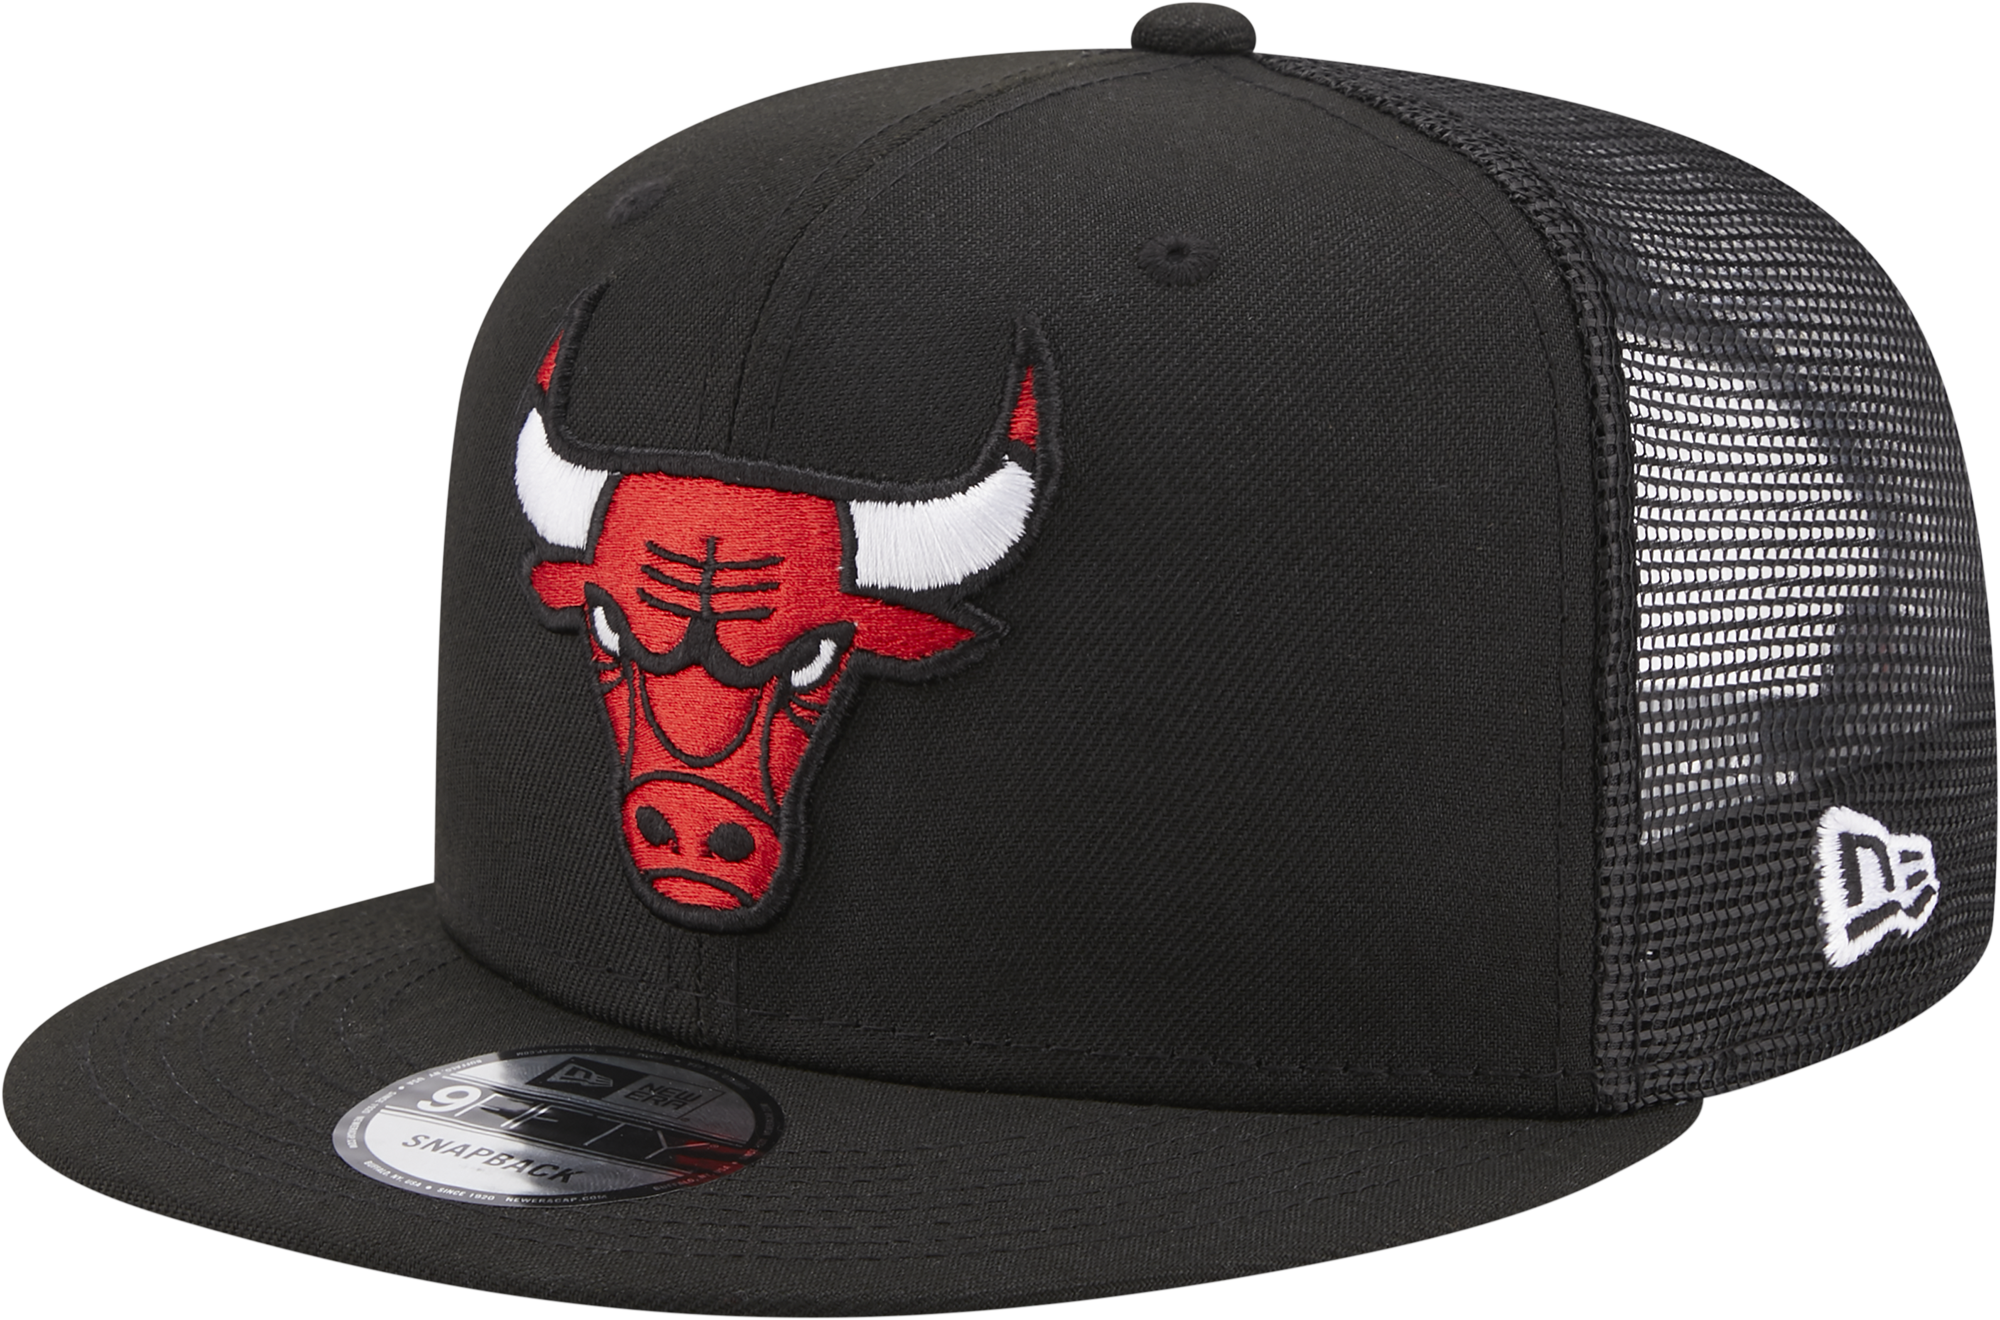 New Era Seasonal Infill Trucker Chicago Bulls Cap (black)